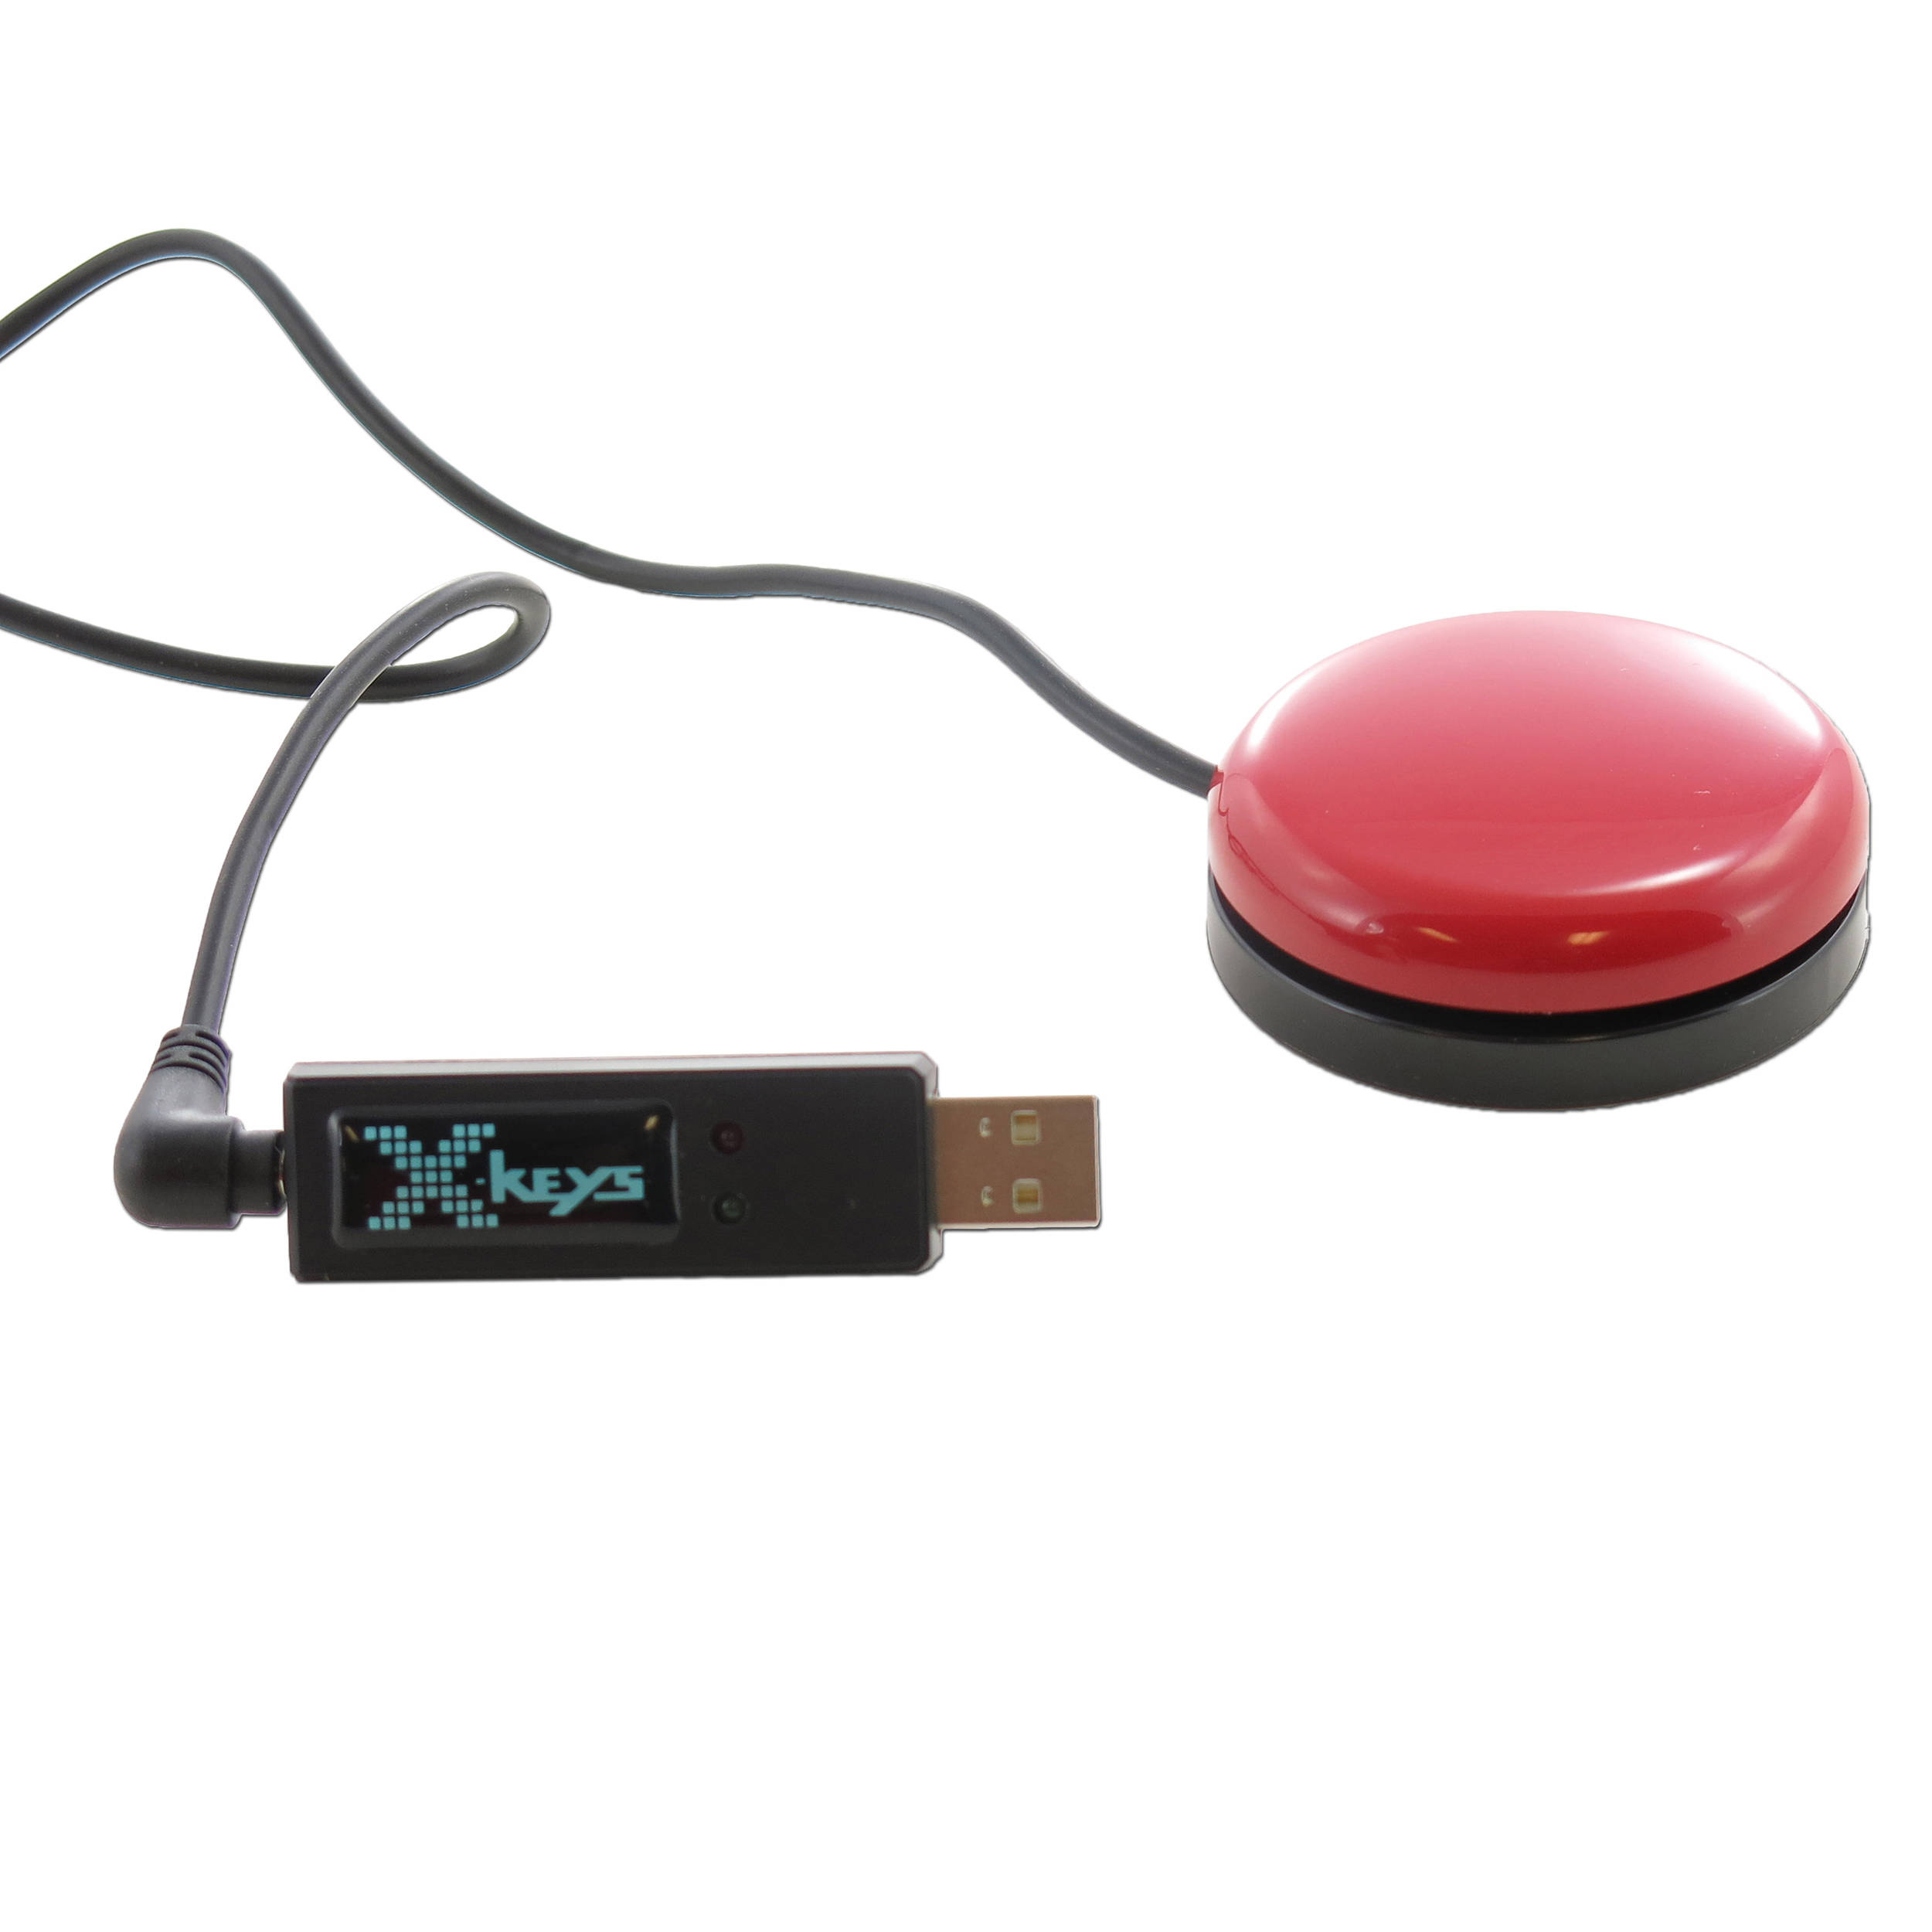 X-keys USB 3 Switch Interface with Red Orby Switch